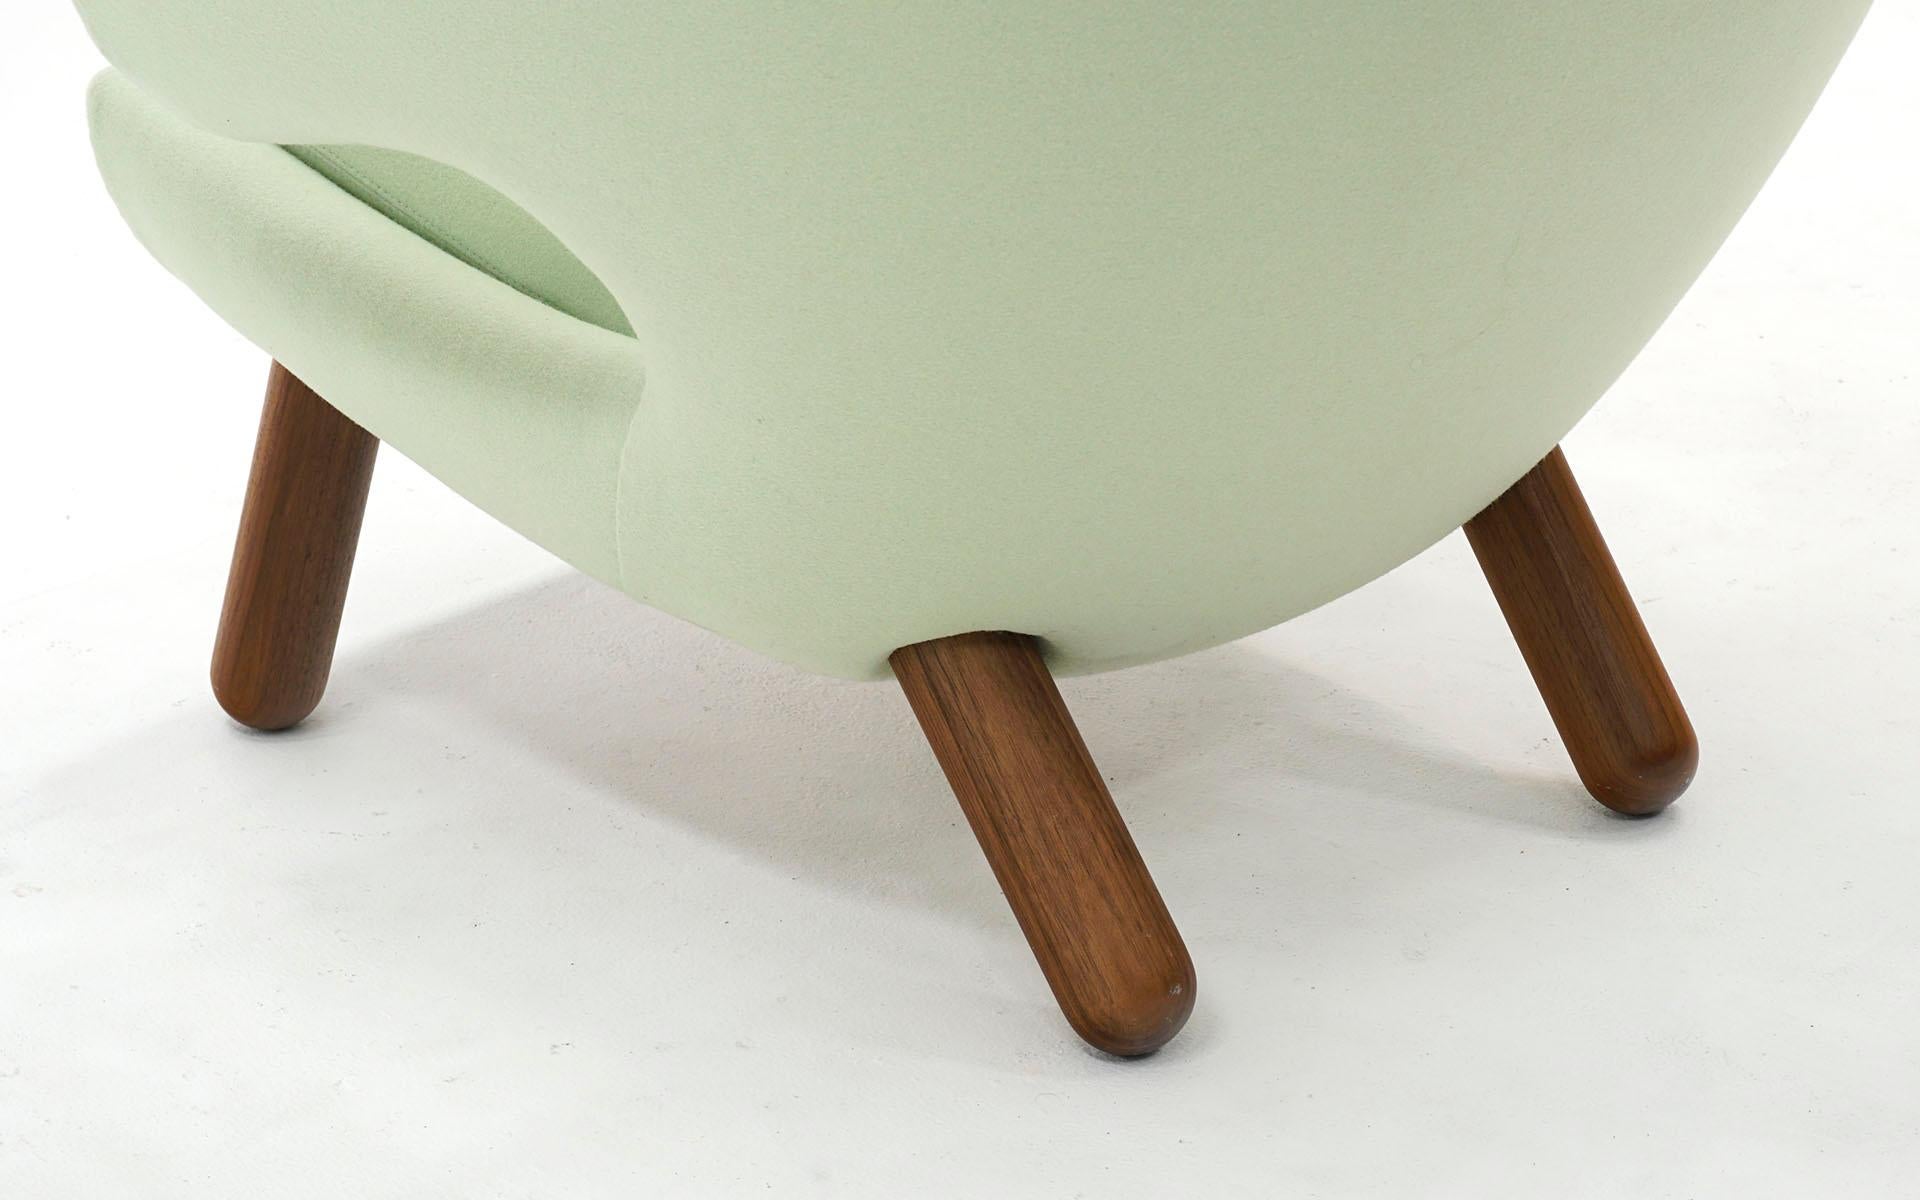 Upholstery Authentic Finn Juhl Pelican Chair by Onecollection, Denmark, Light Mint Green